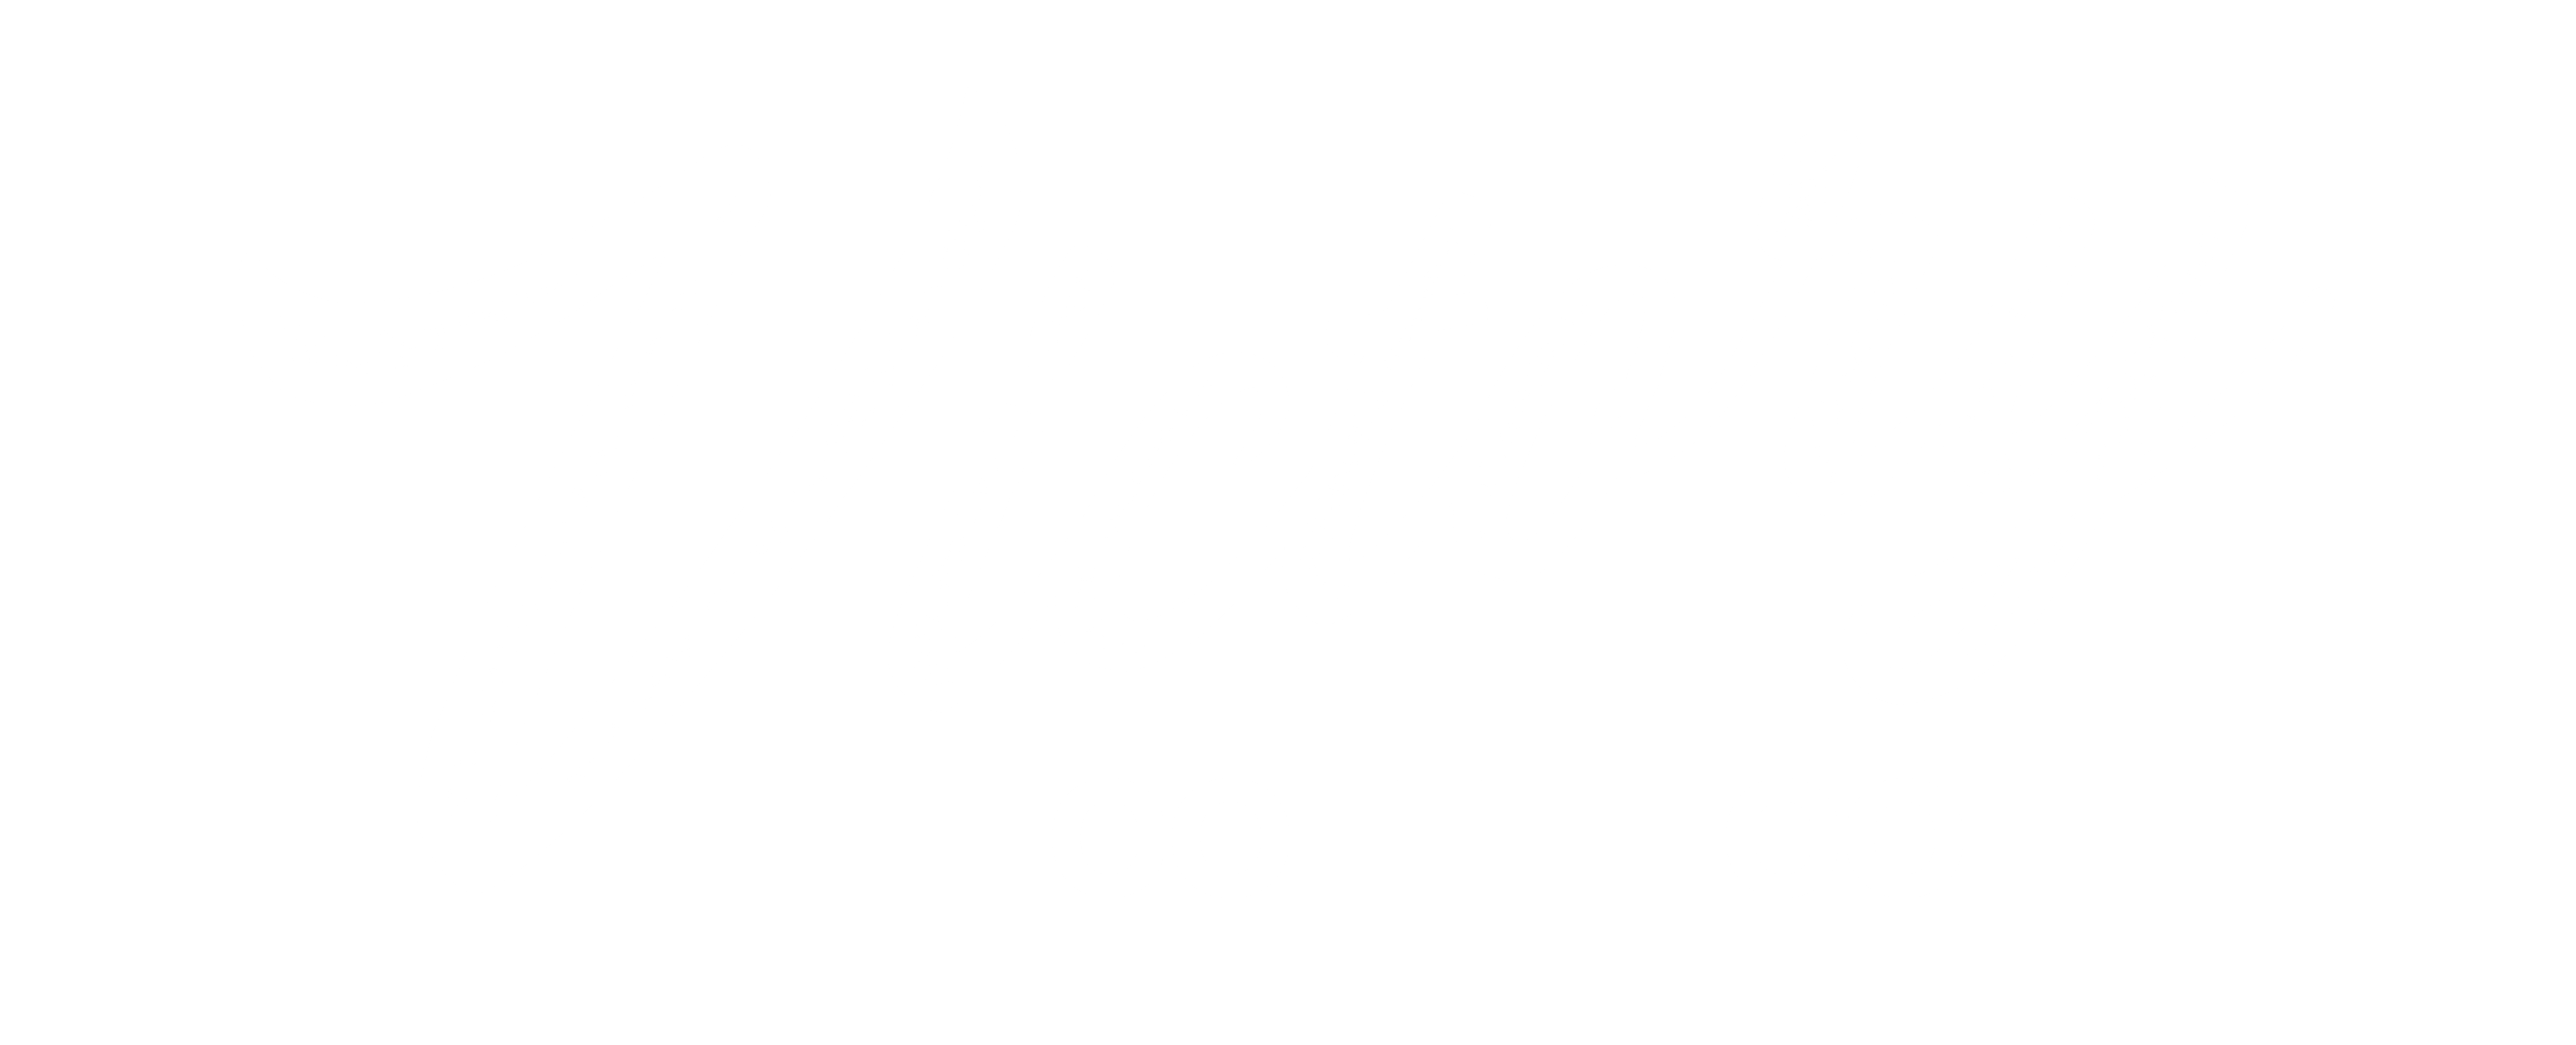 Victory Coffee Co